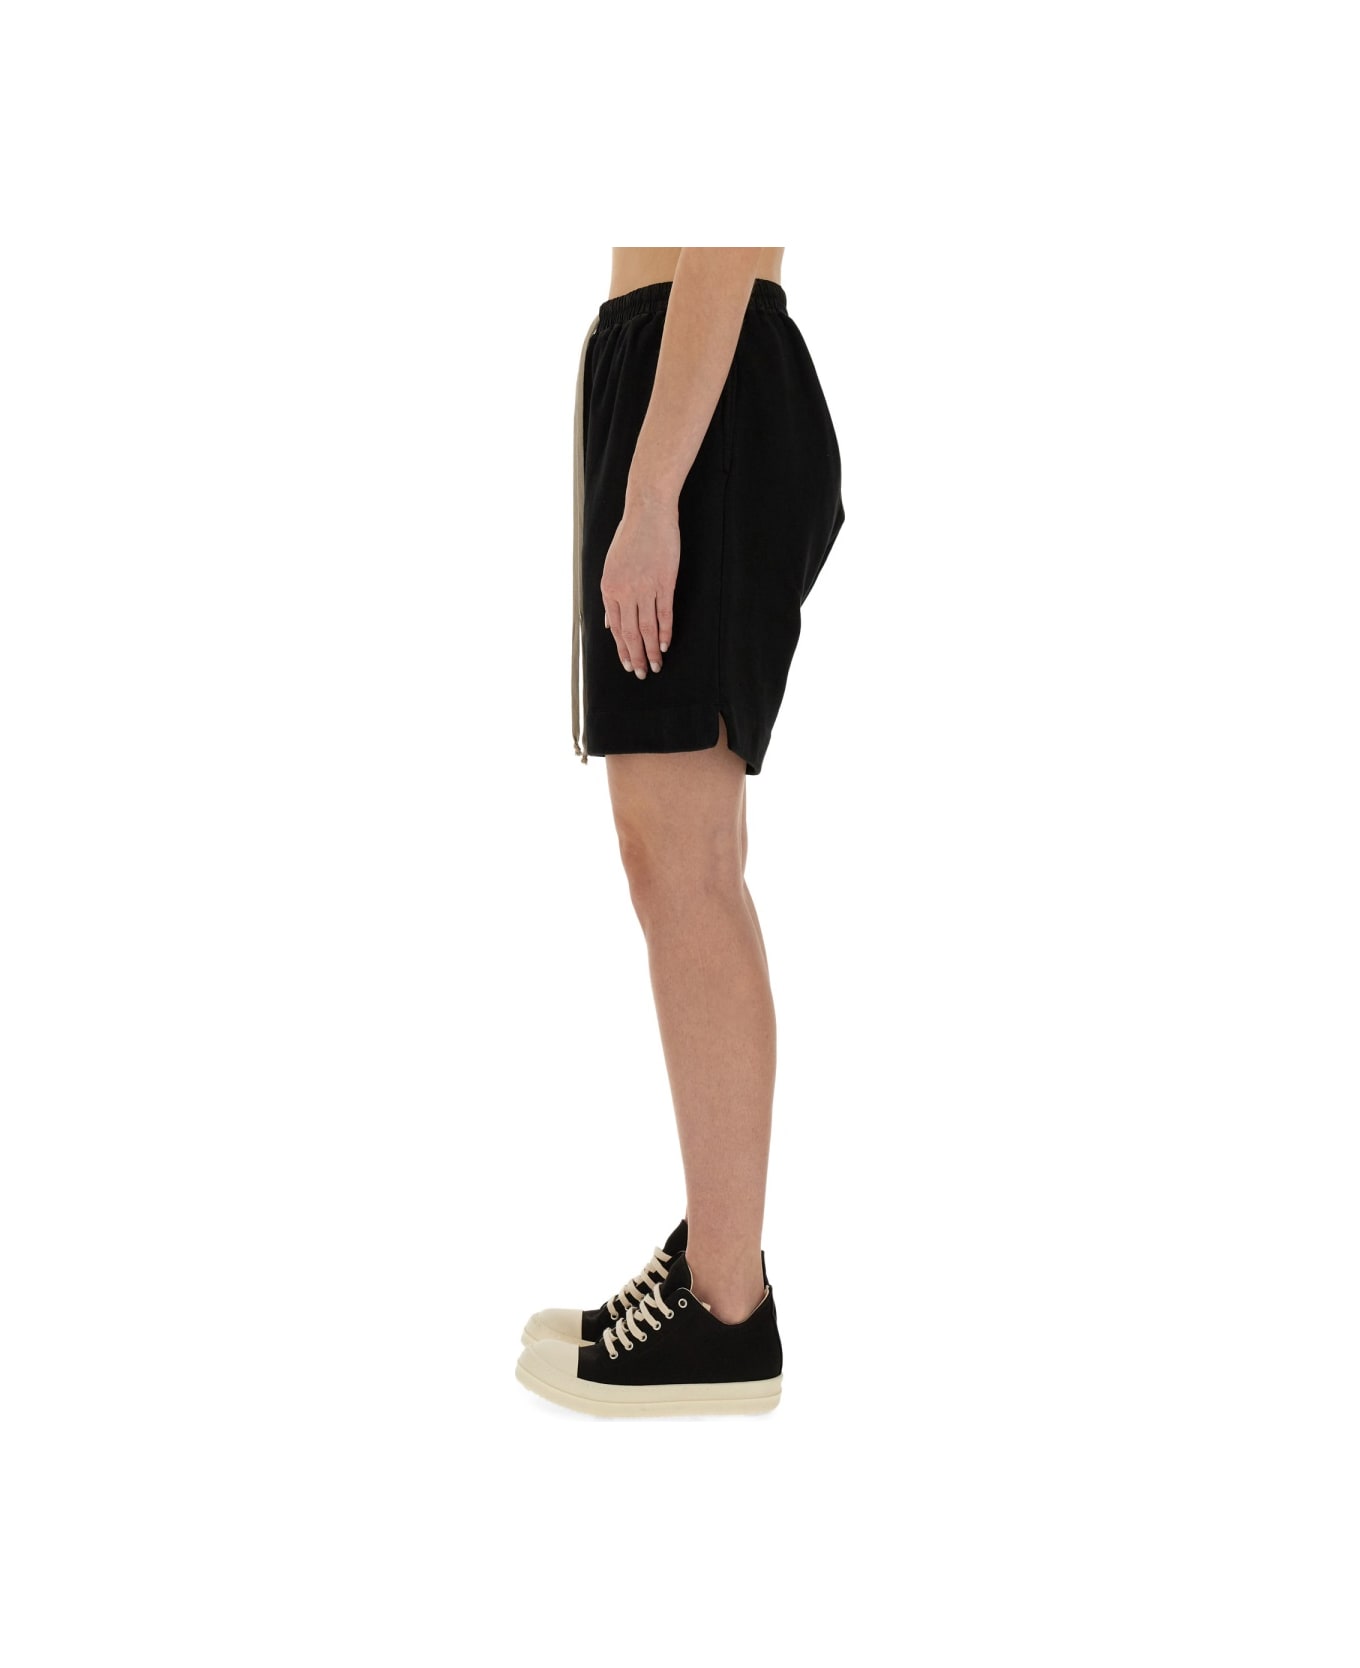 DRKSHDW Cotton Bermuda Shorts - BLACK ショートパンツ